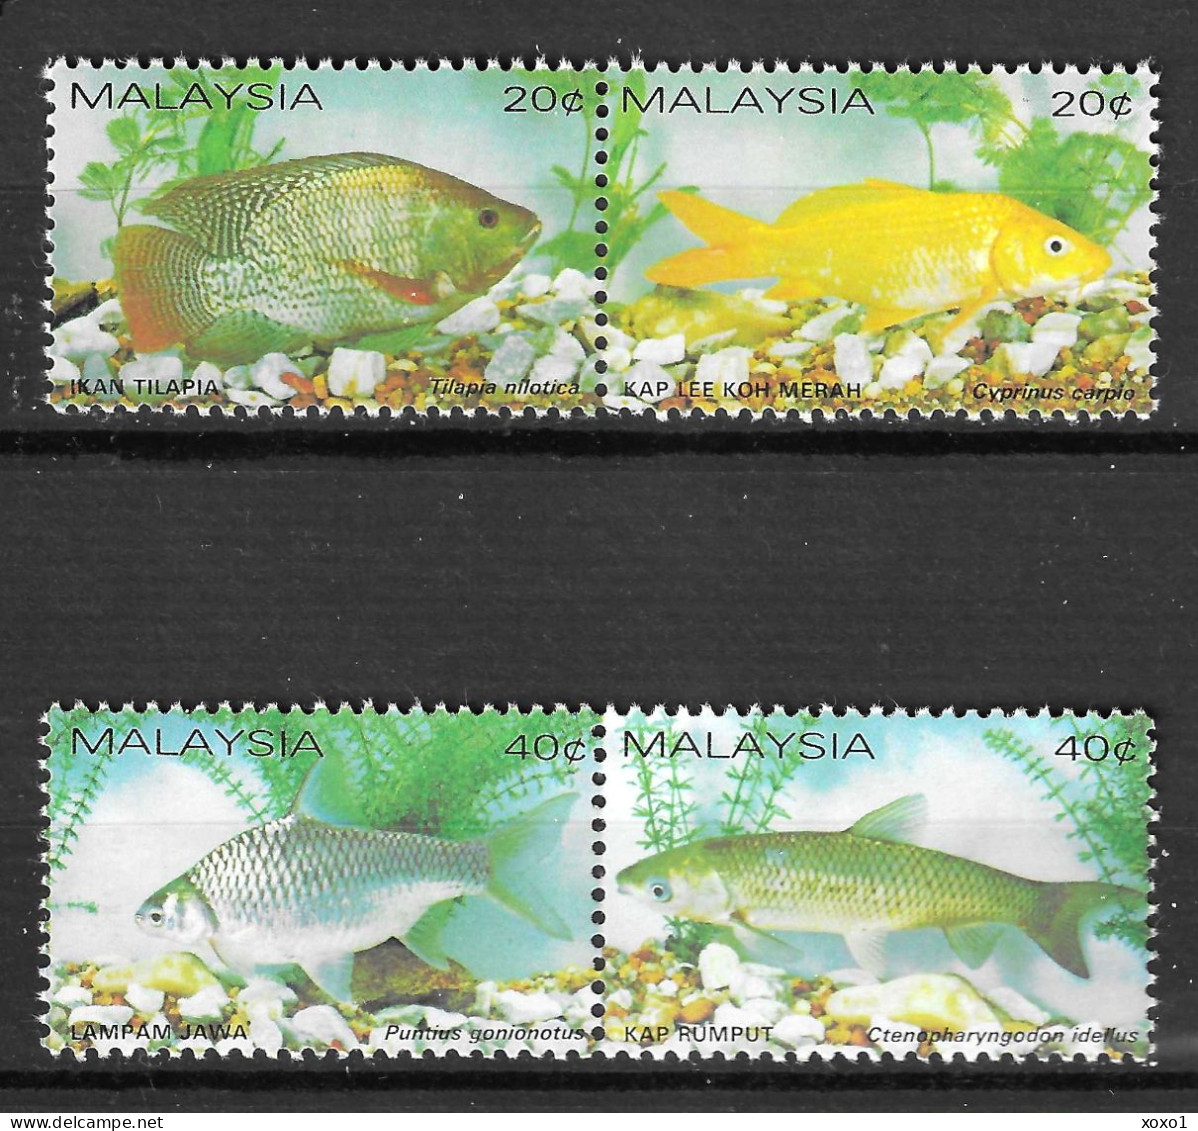 Malaysia 1983 MiNr. 258 - 261 Marine Life Fishes 4v   MNH** 12.00 € - Malesia (1964-...)